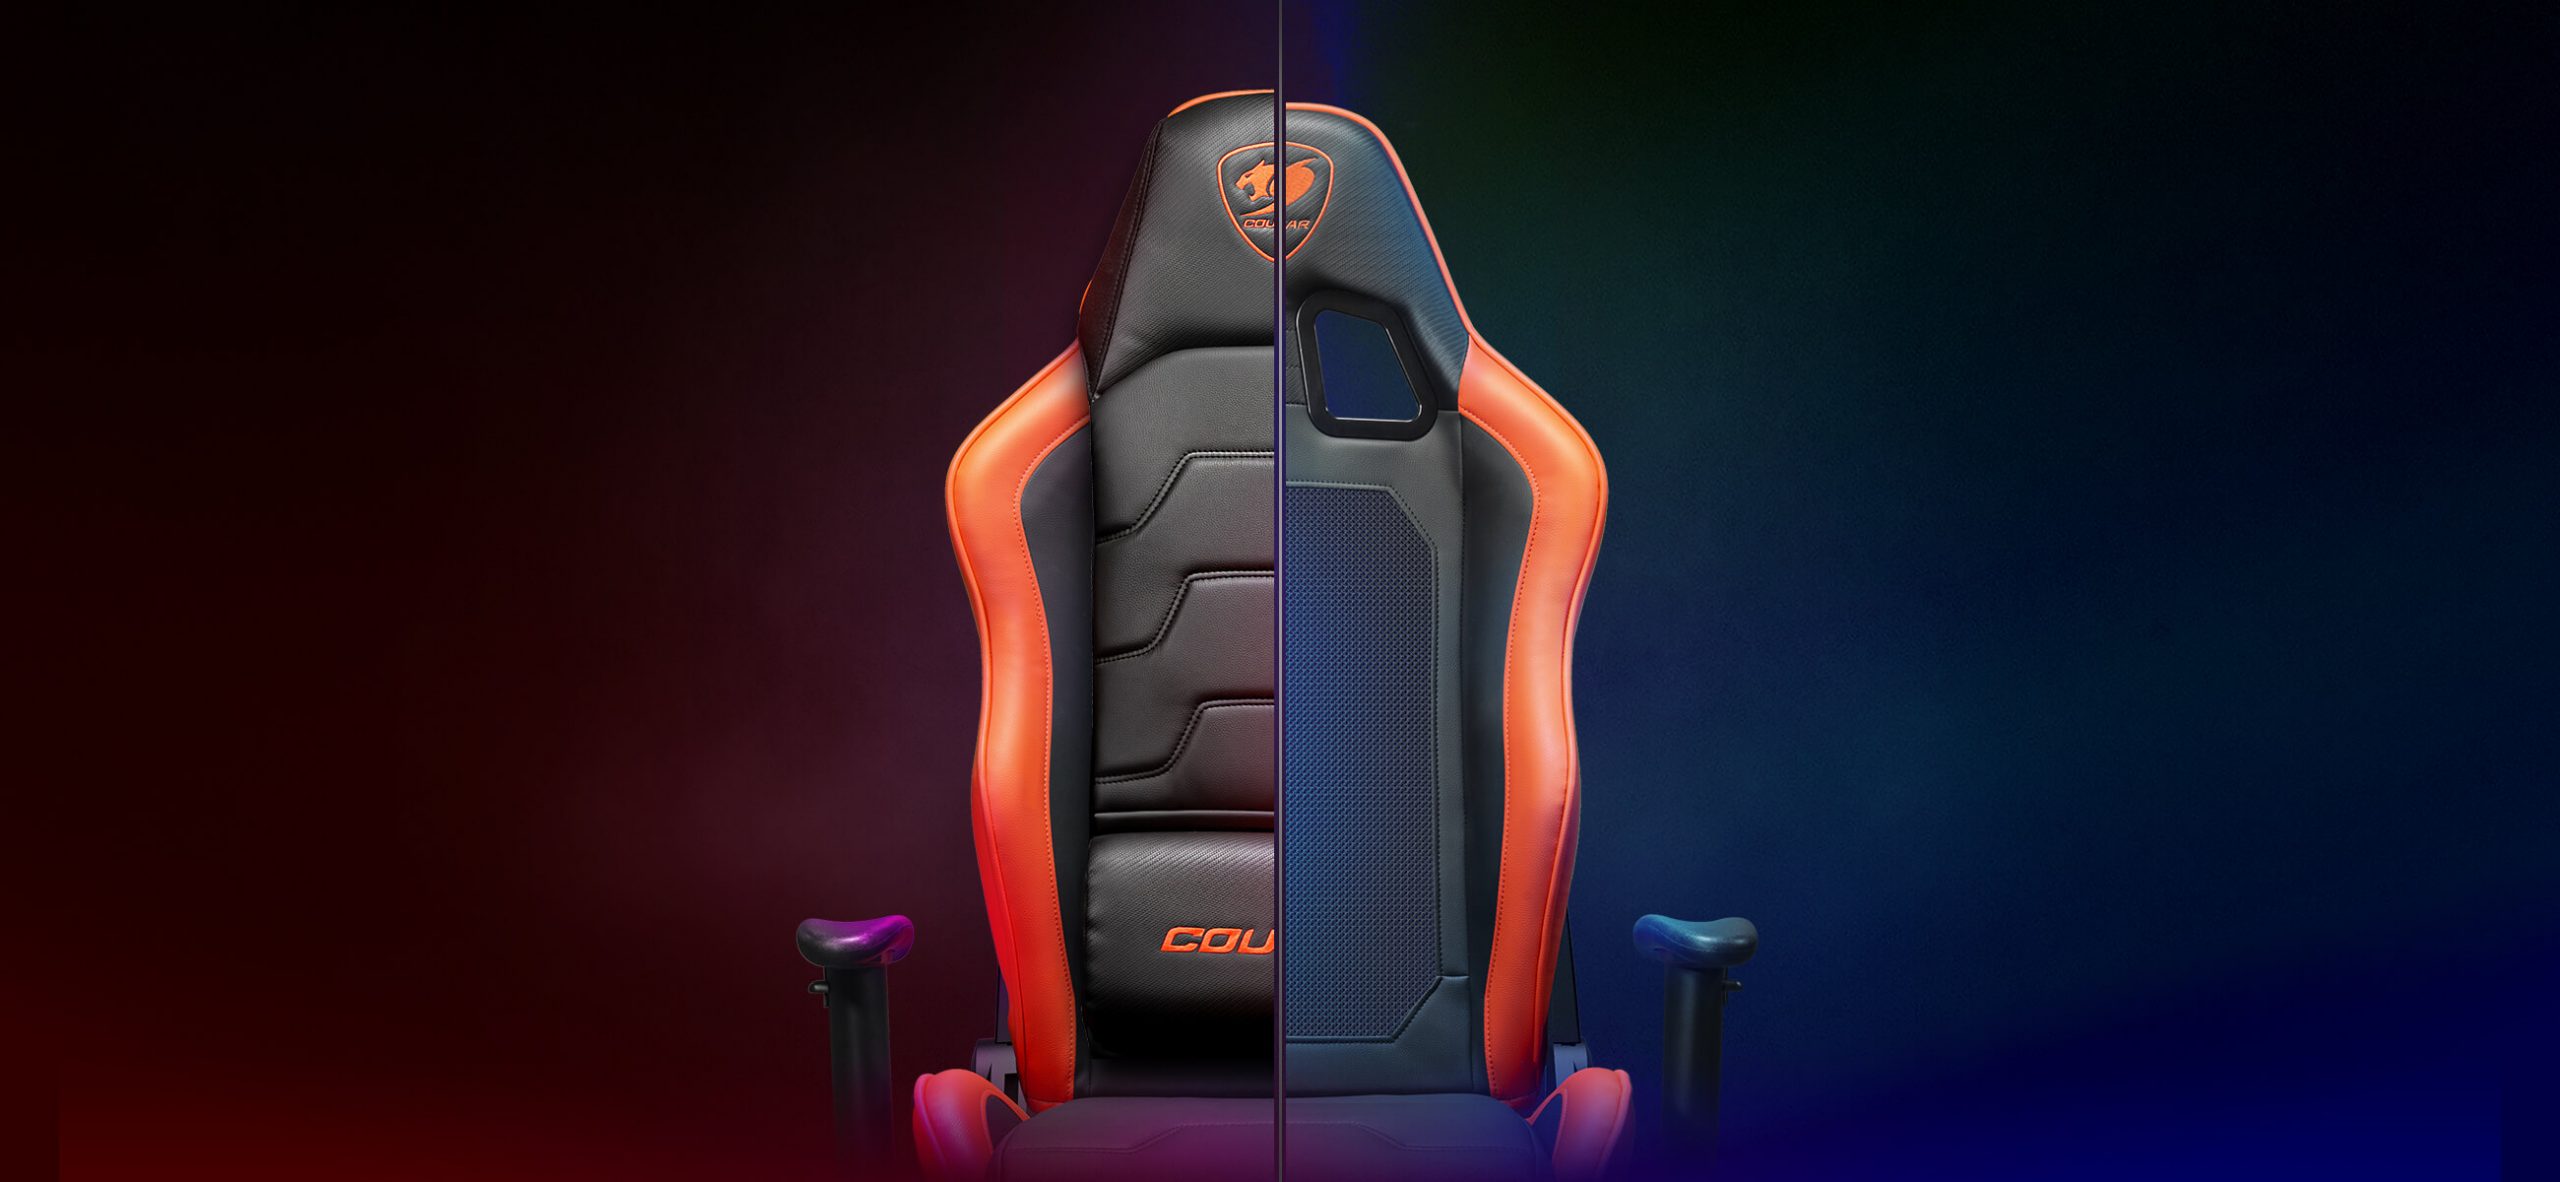 COUGAR ARMOR AIR 3MAAIR.0001 high-back Gaming Chair ergonomic